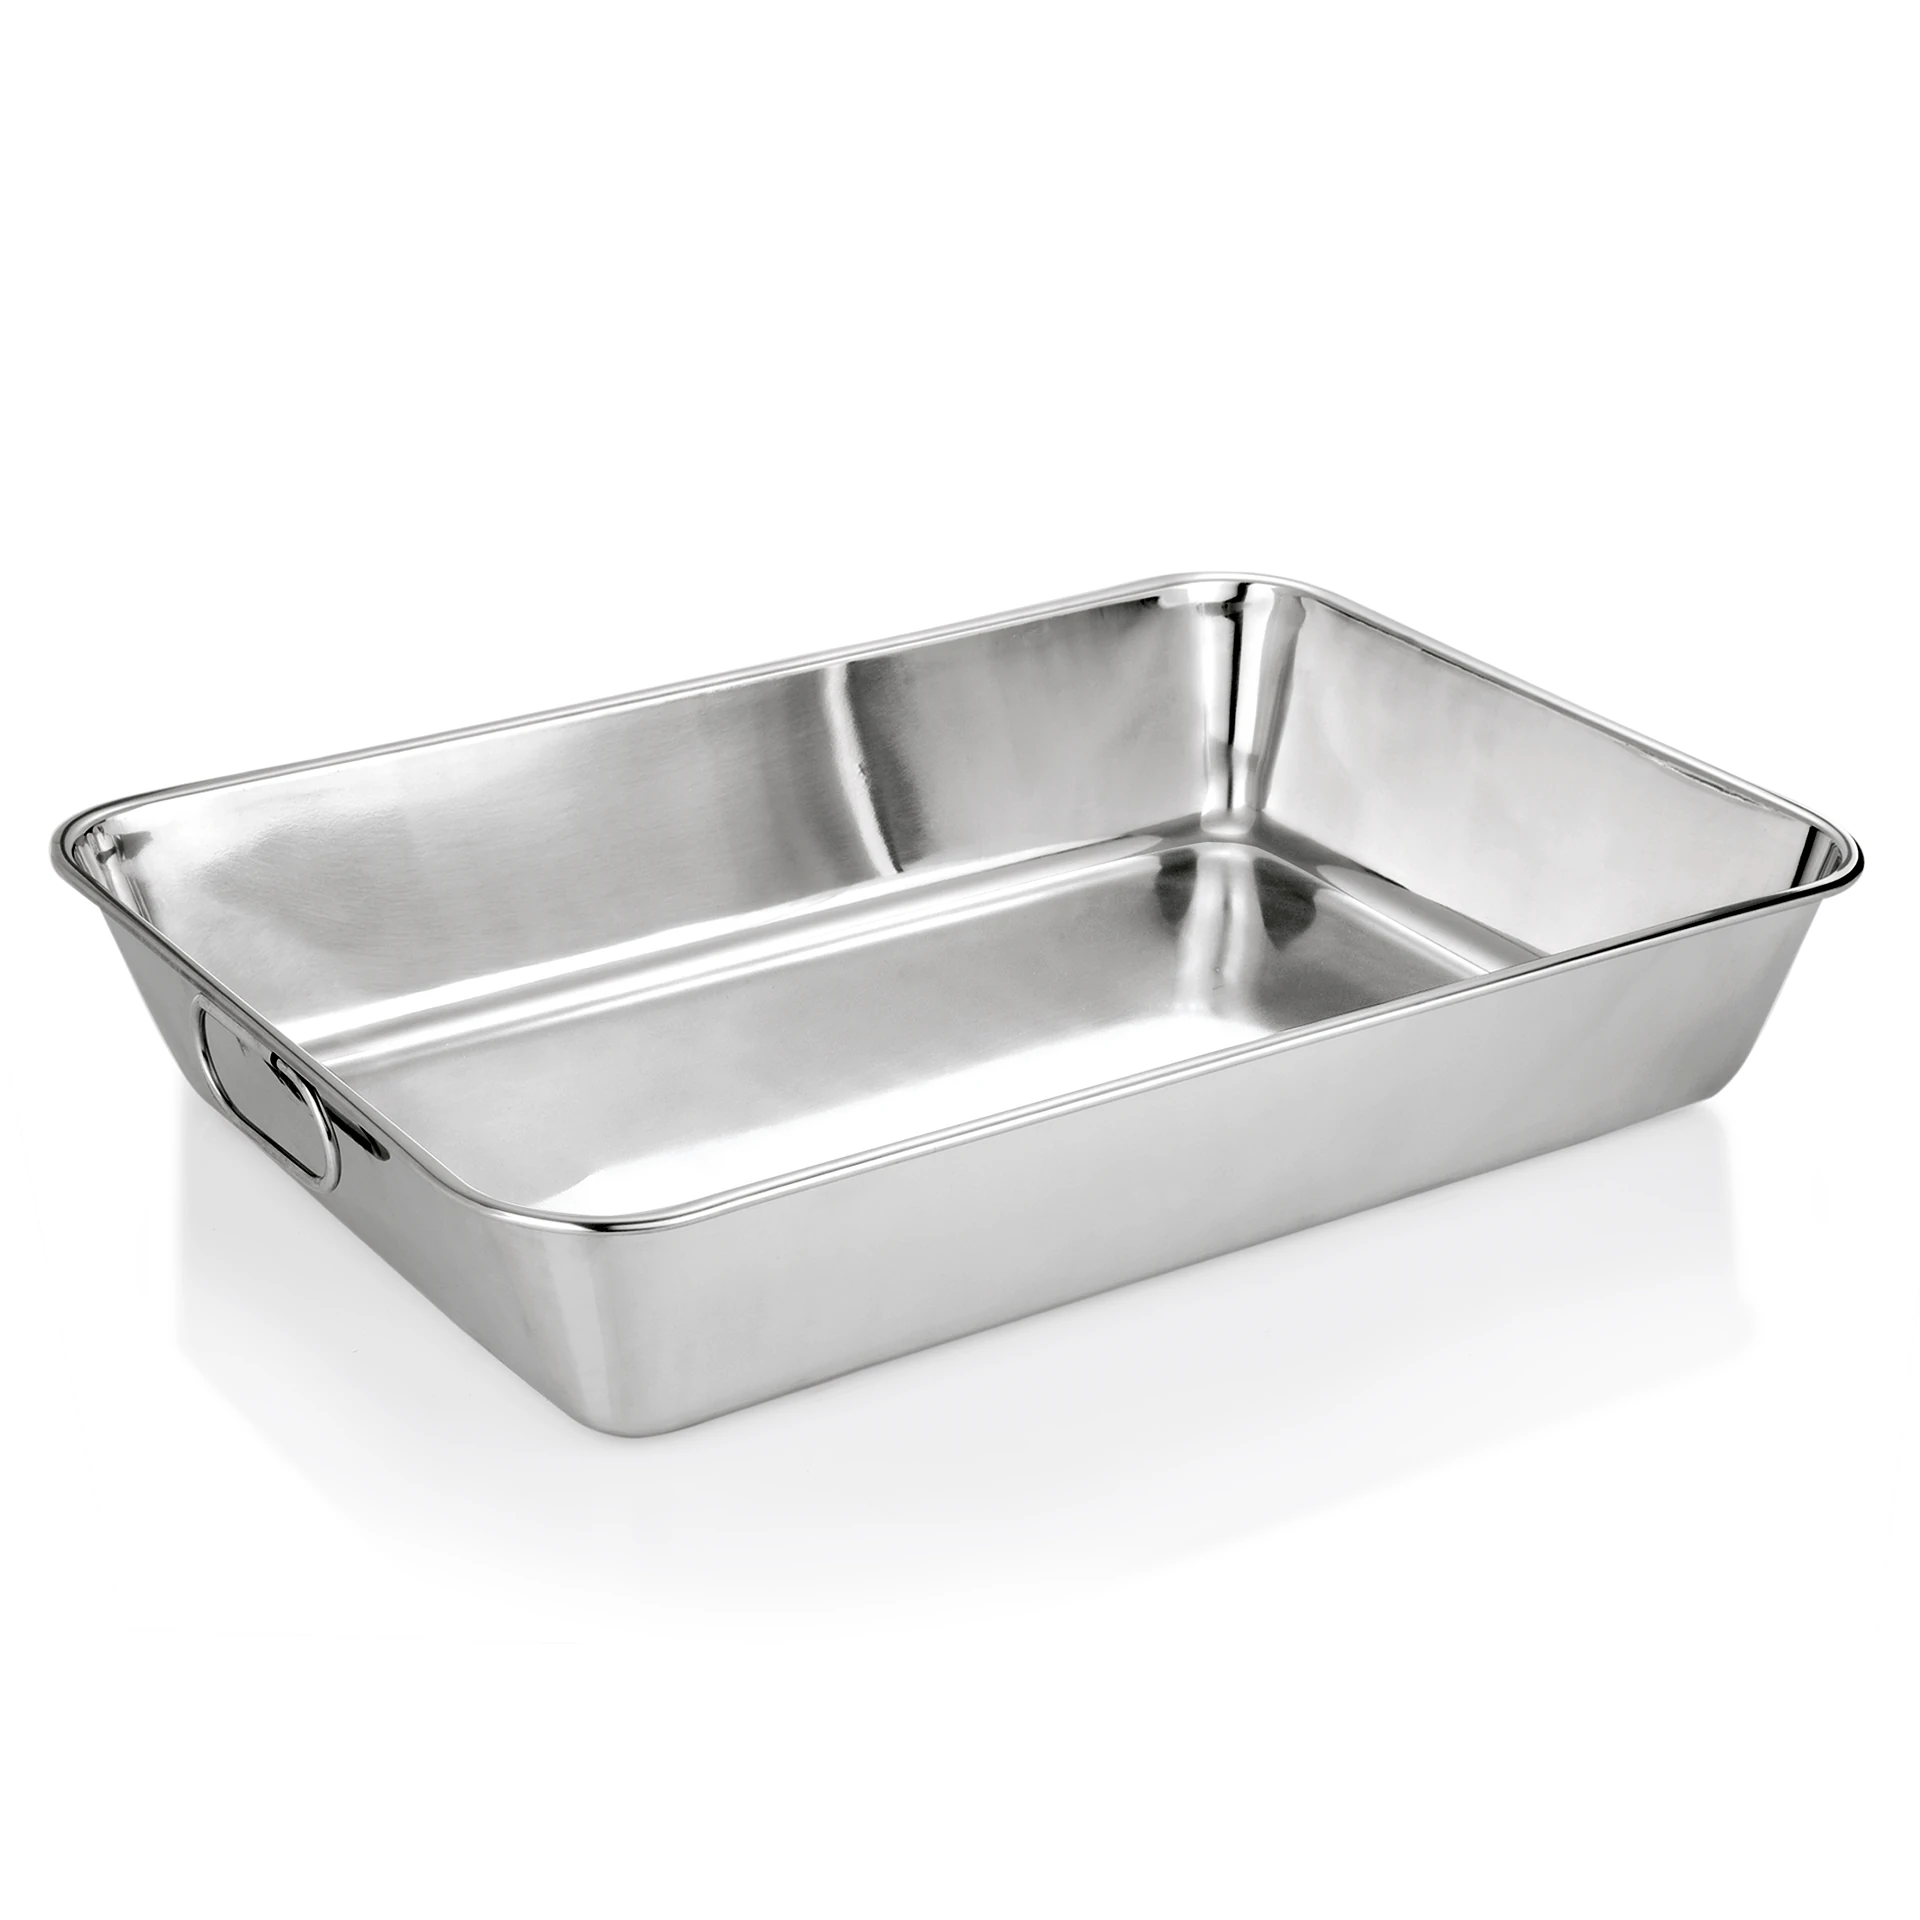 Roasting pan/display tray